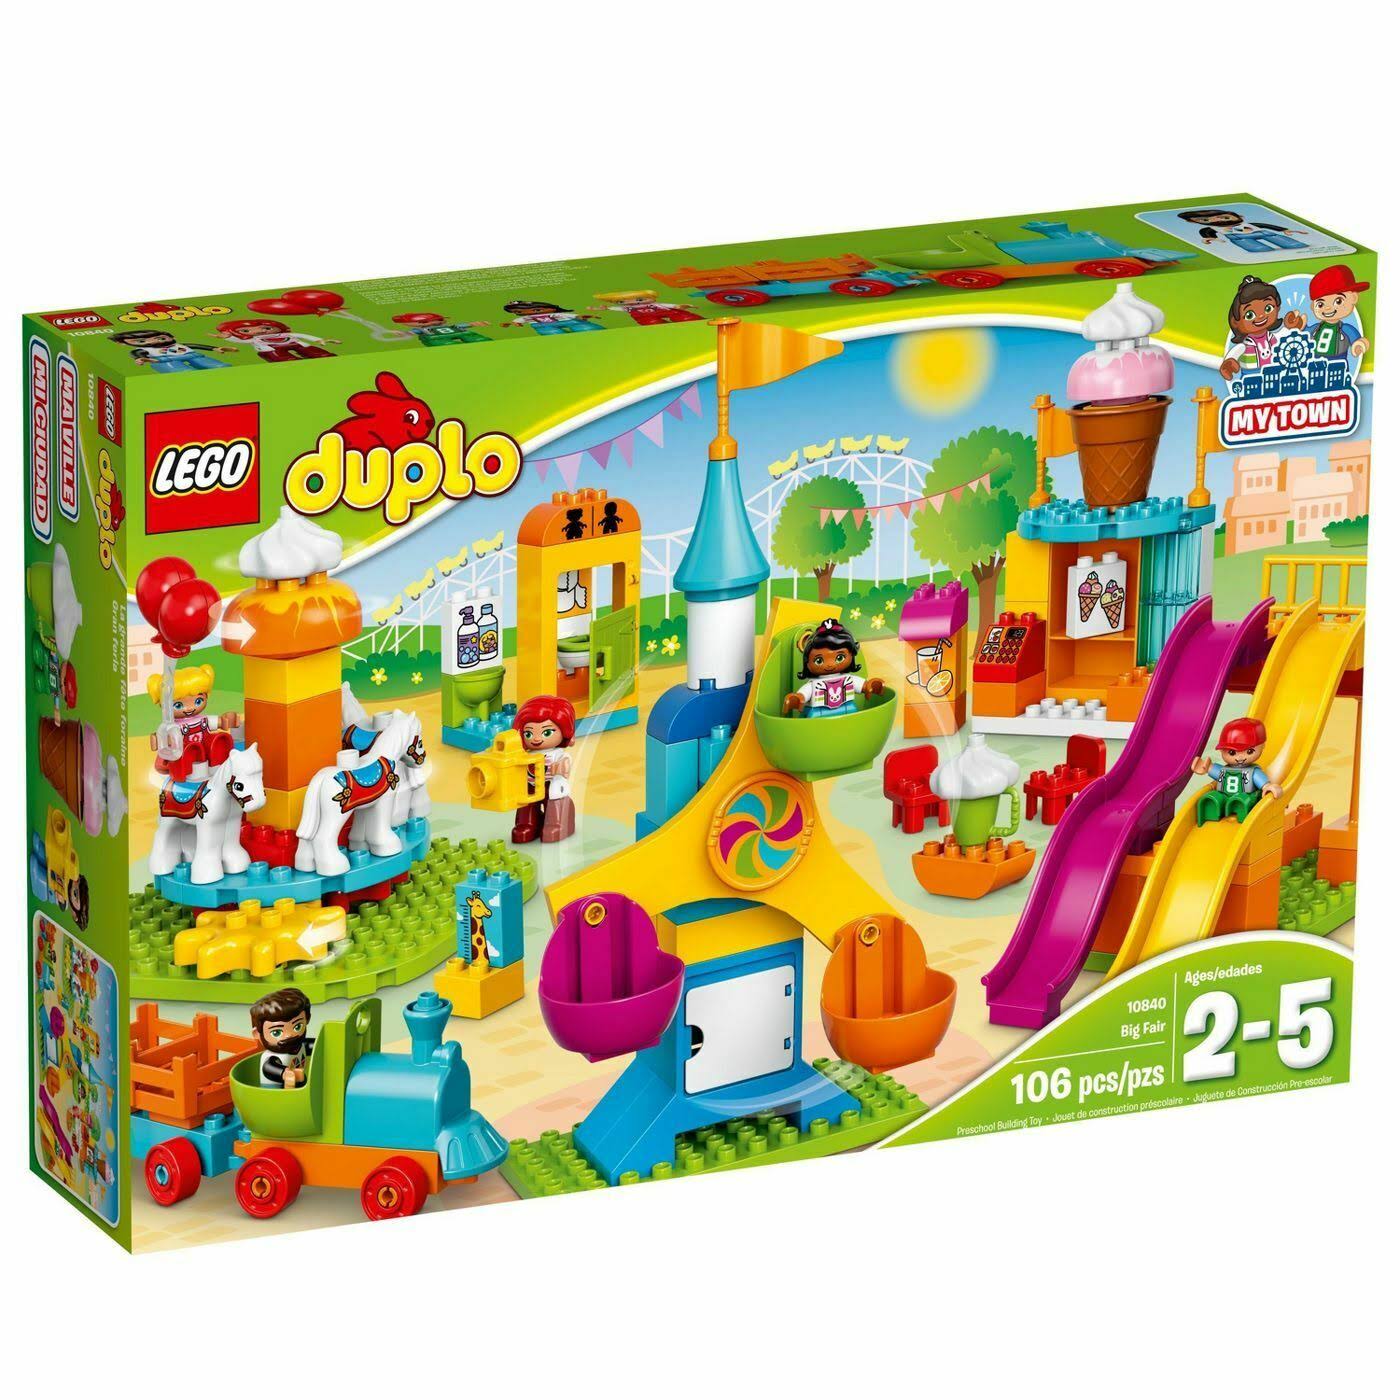 Lego Duplo Town Big Fair Building Play Set